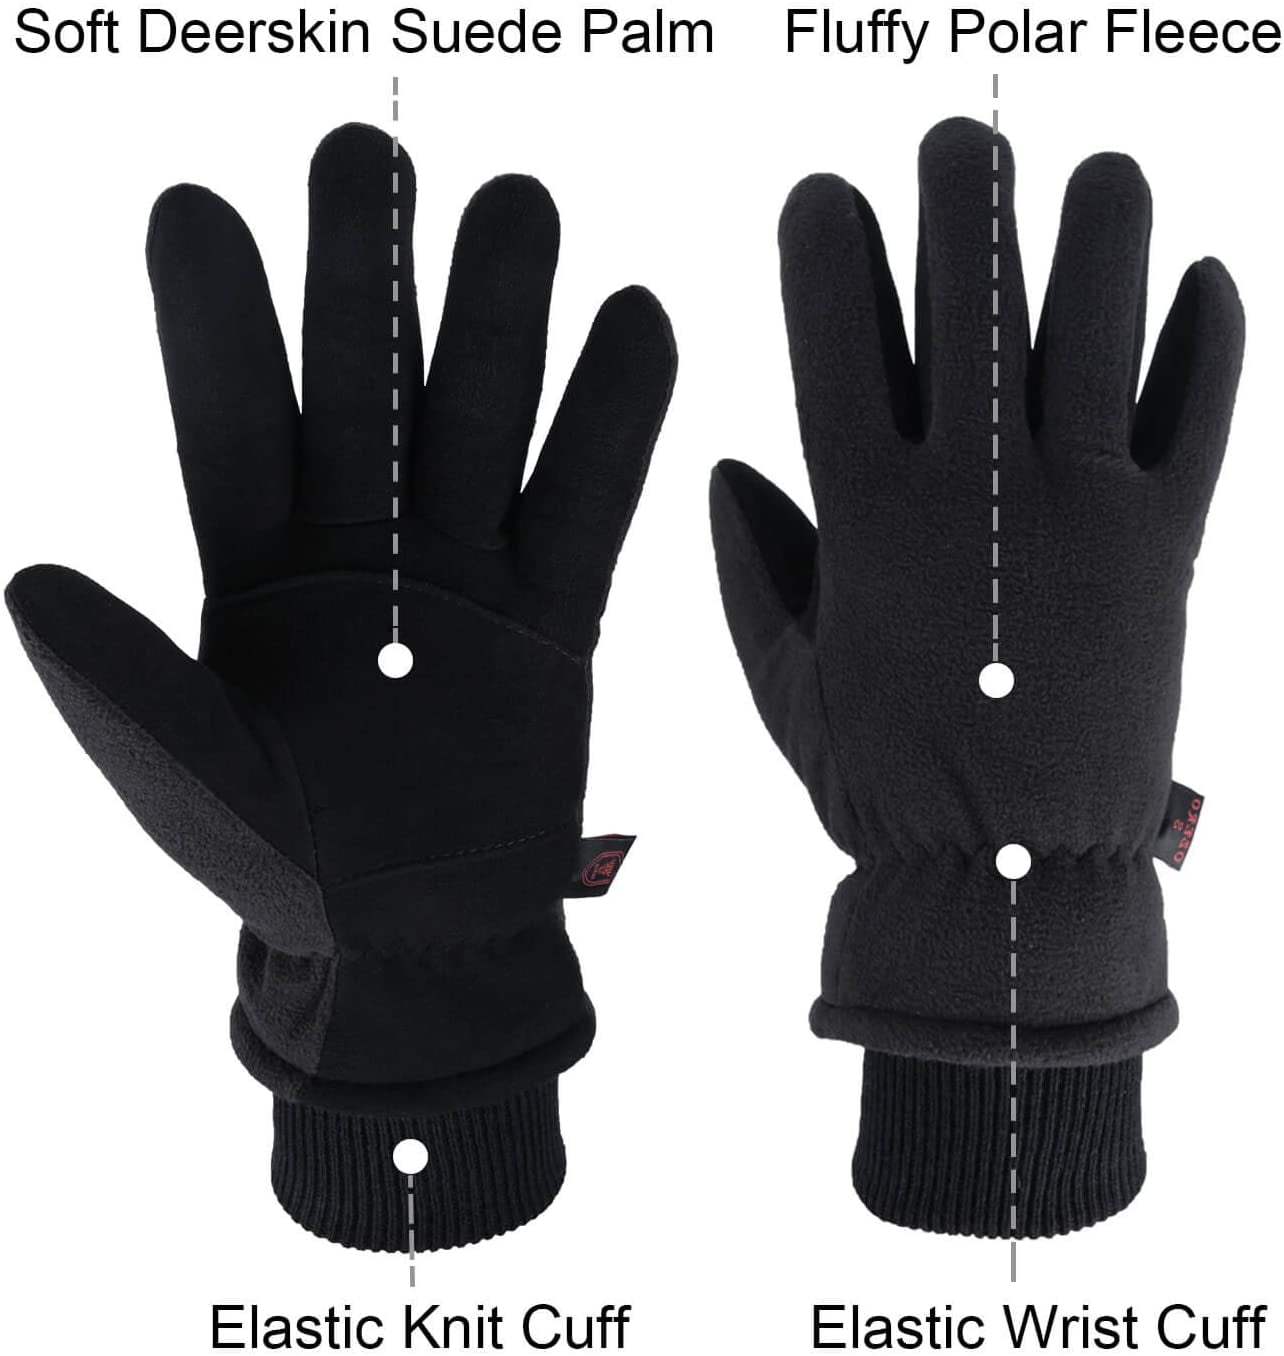 Fleece Thick Warm Light Weight Leather Microfiber Winter Gloves Men Women L Med 